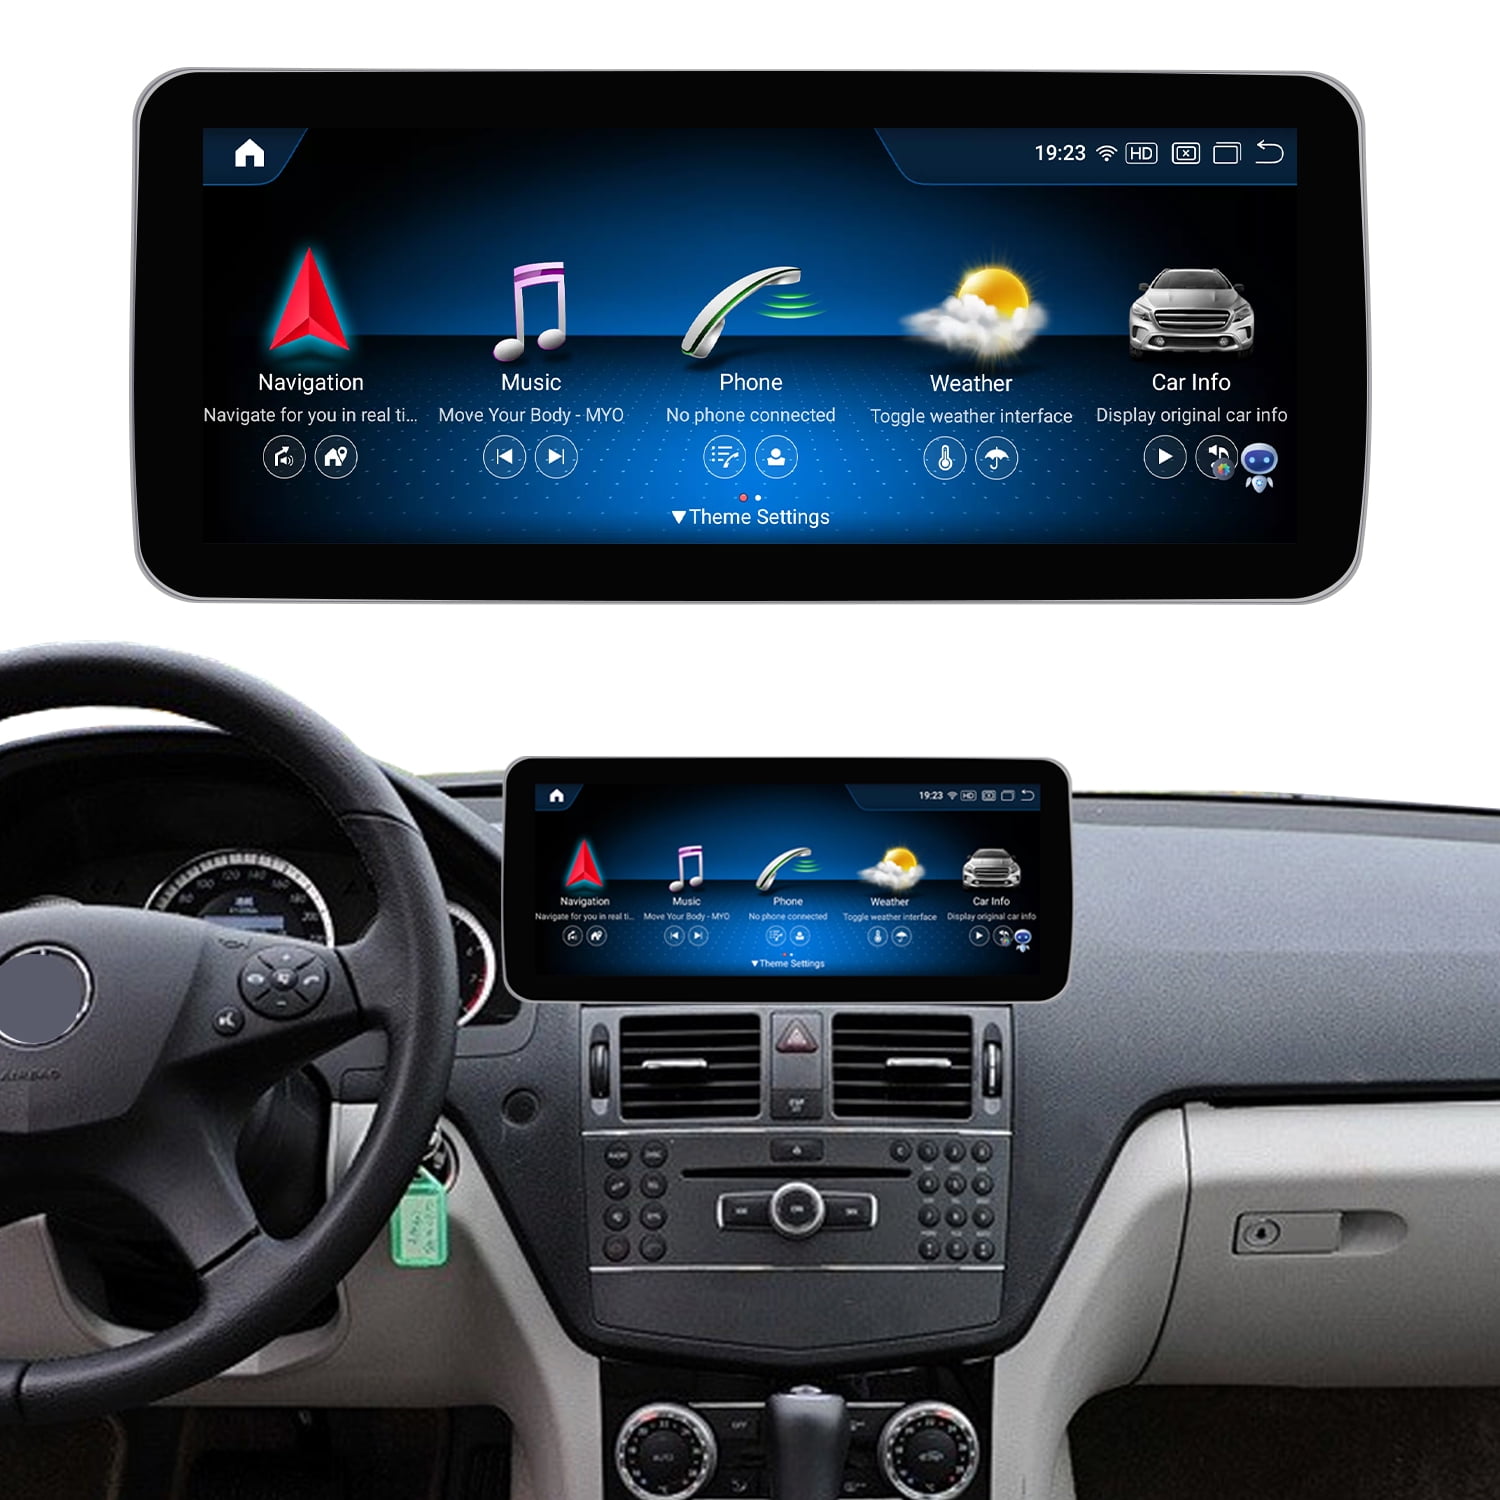 Radio de coche de 10.25 pulgadas Android 11 pantalla táctil para Mercedes  Benz Clase C, W204 2008-2014 Año NTG 4.0/4.5, 6+128G, compatible con Apple